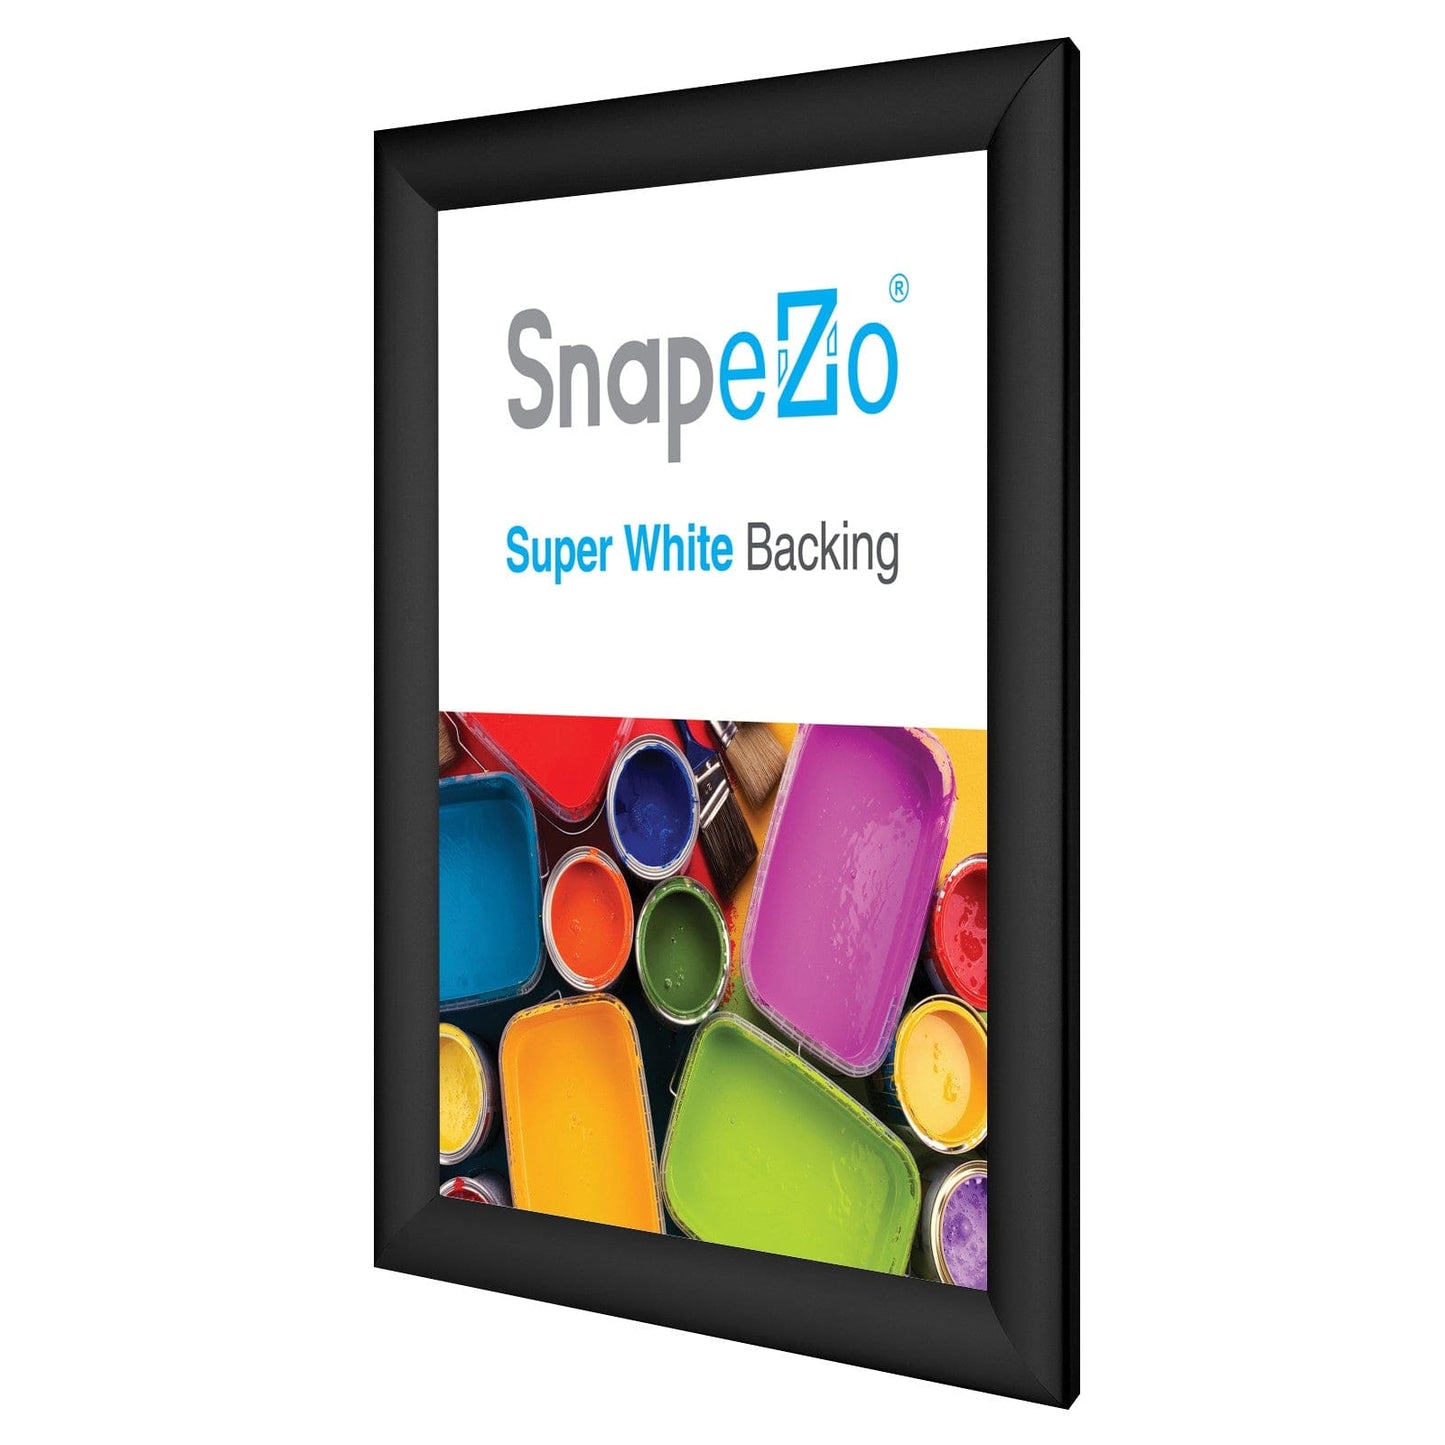 8x10 Black SnapeZo® Snap Frame - 1.2" Profile - Snap Frames Direct